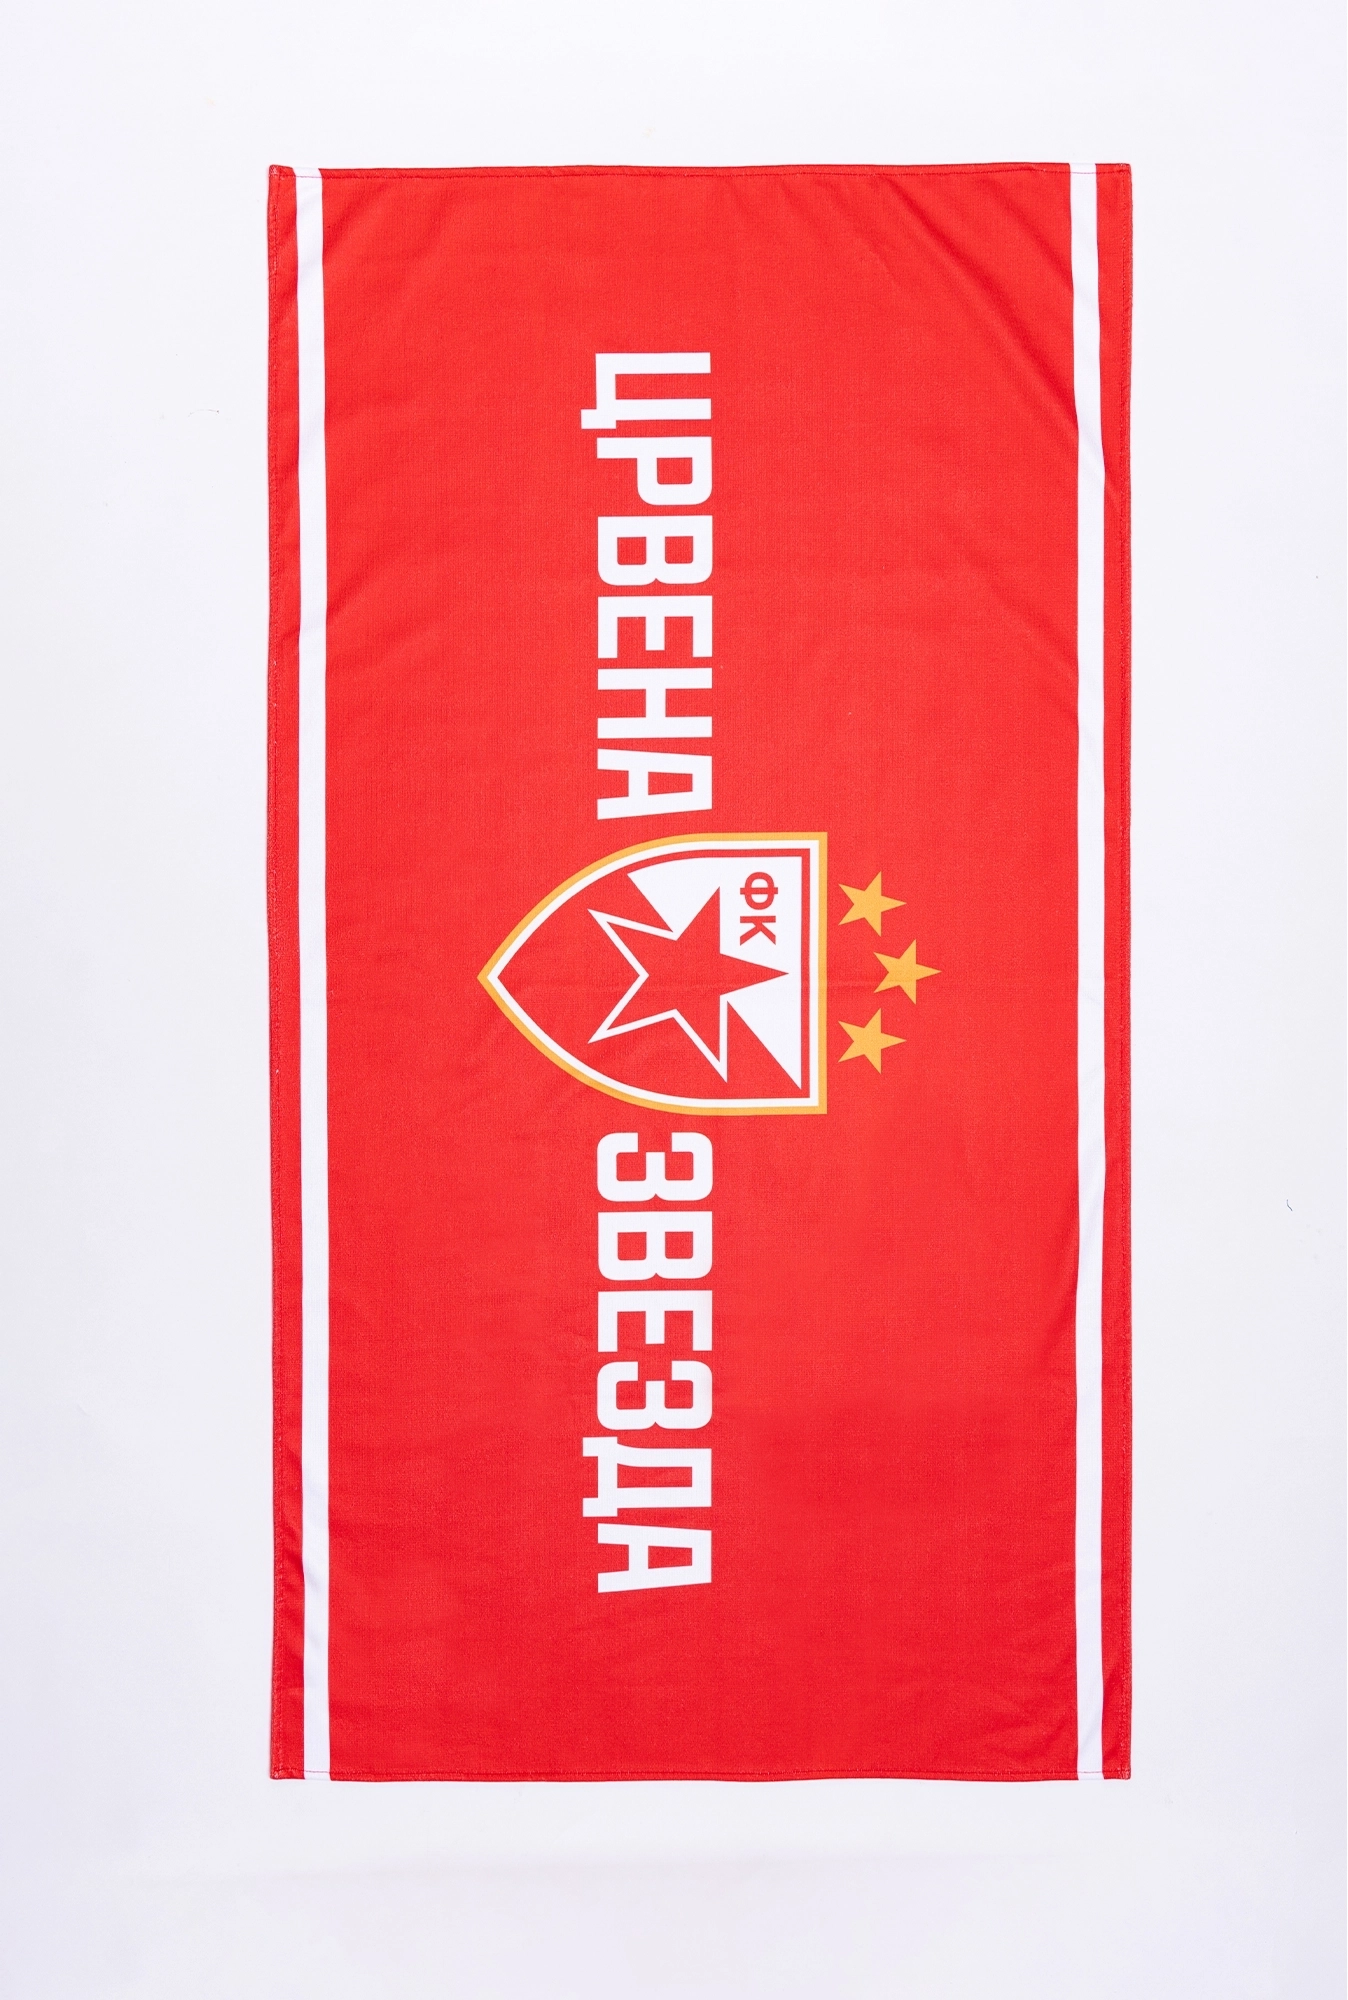 Plažni peškir Crvena Zvezda grb